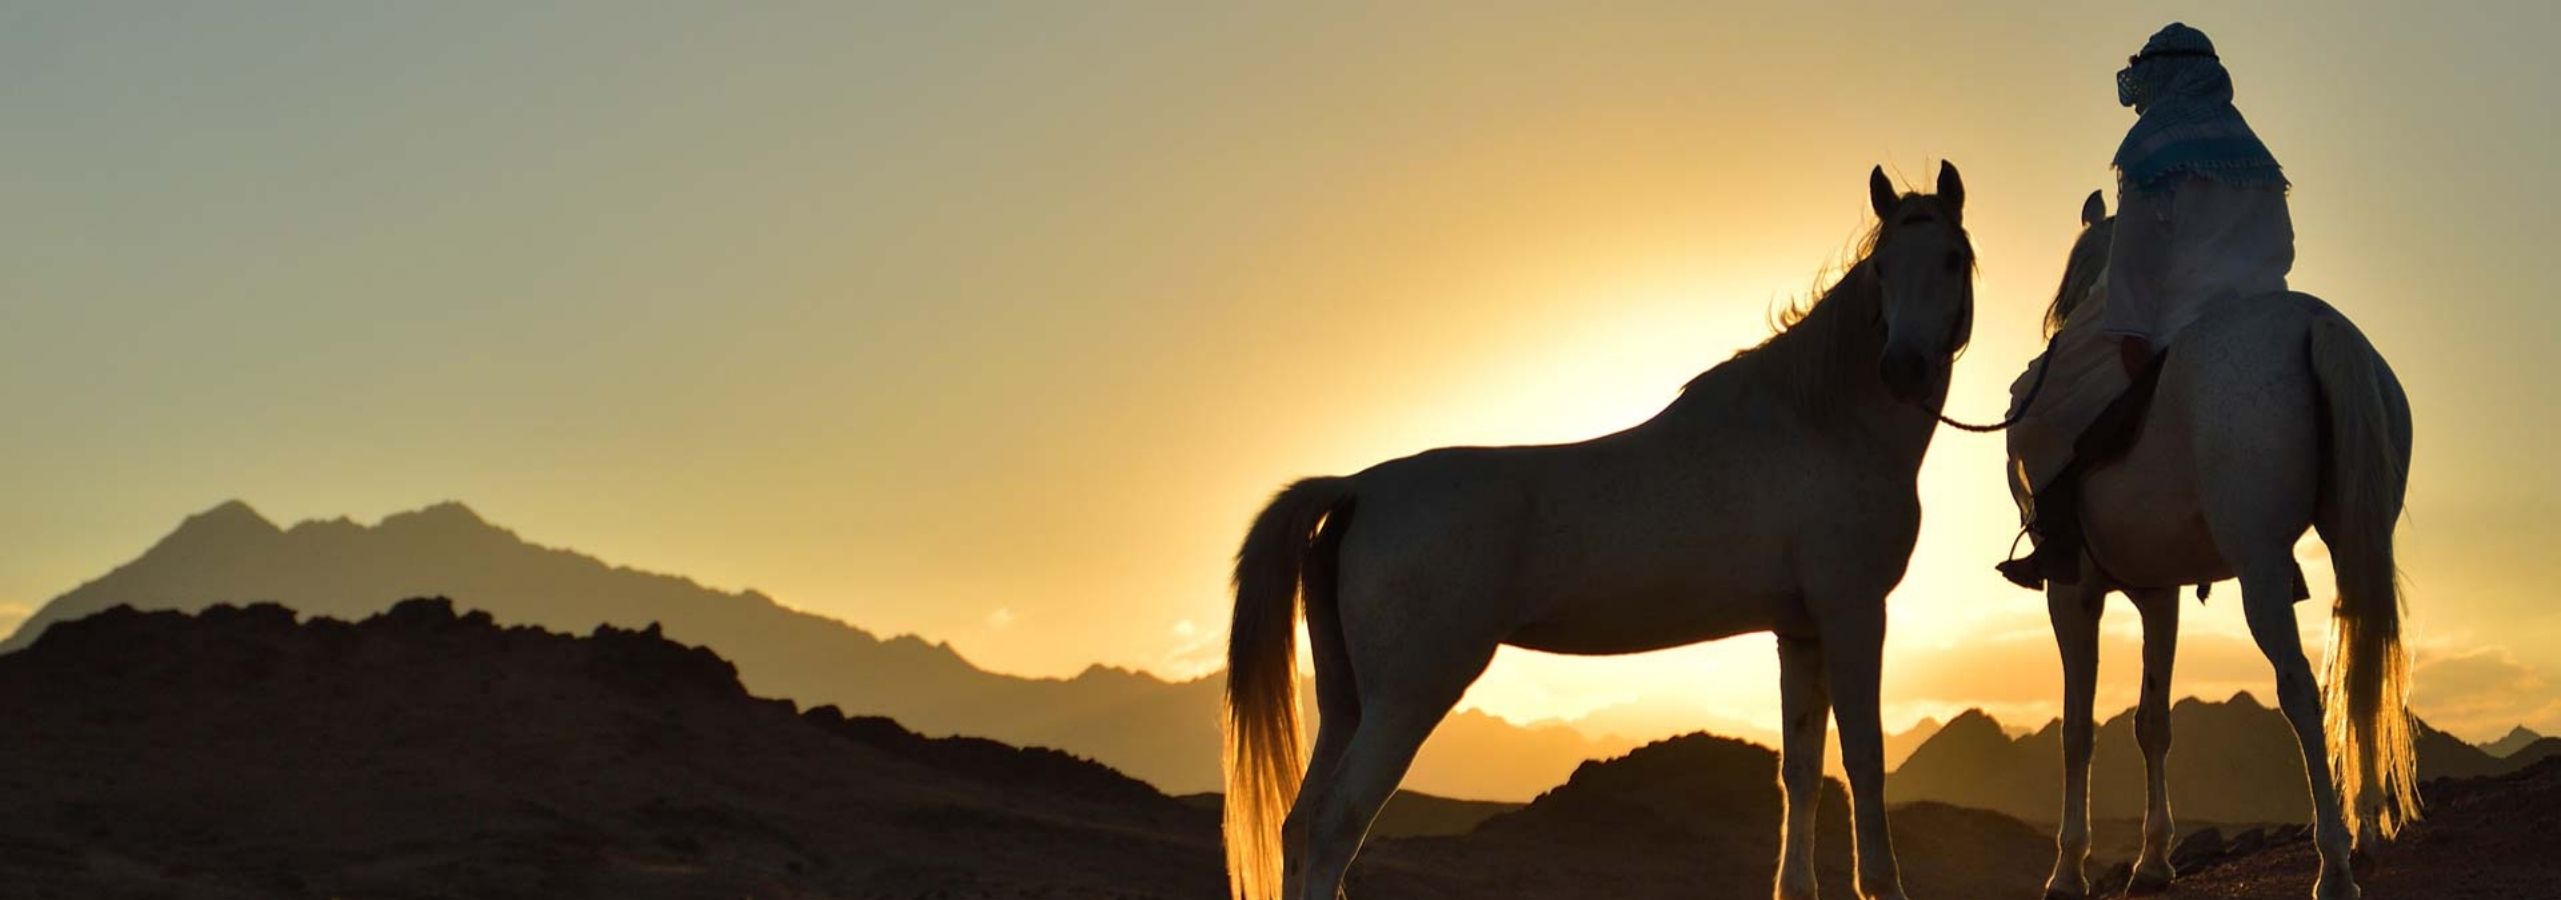 egypt-equestrian-dream-3-3301.jpg